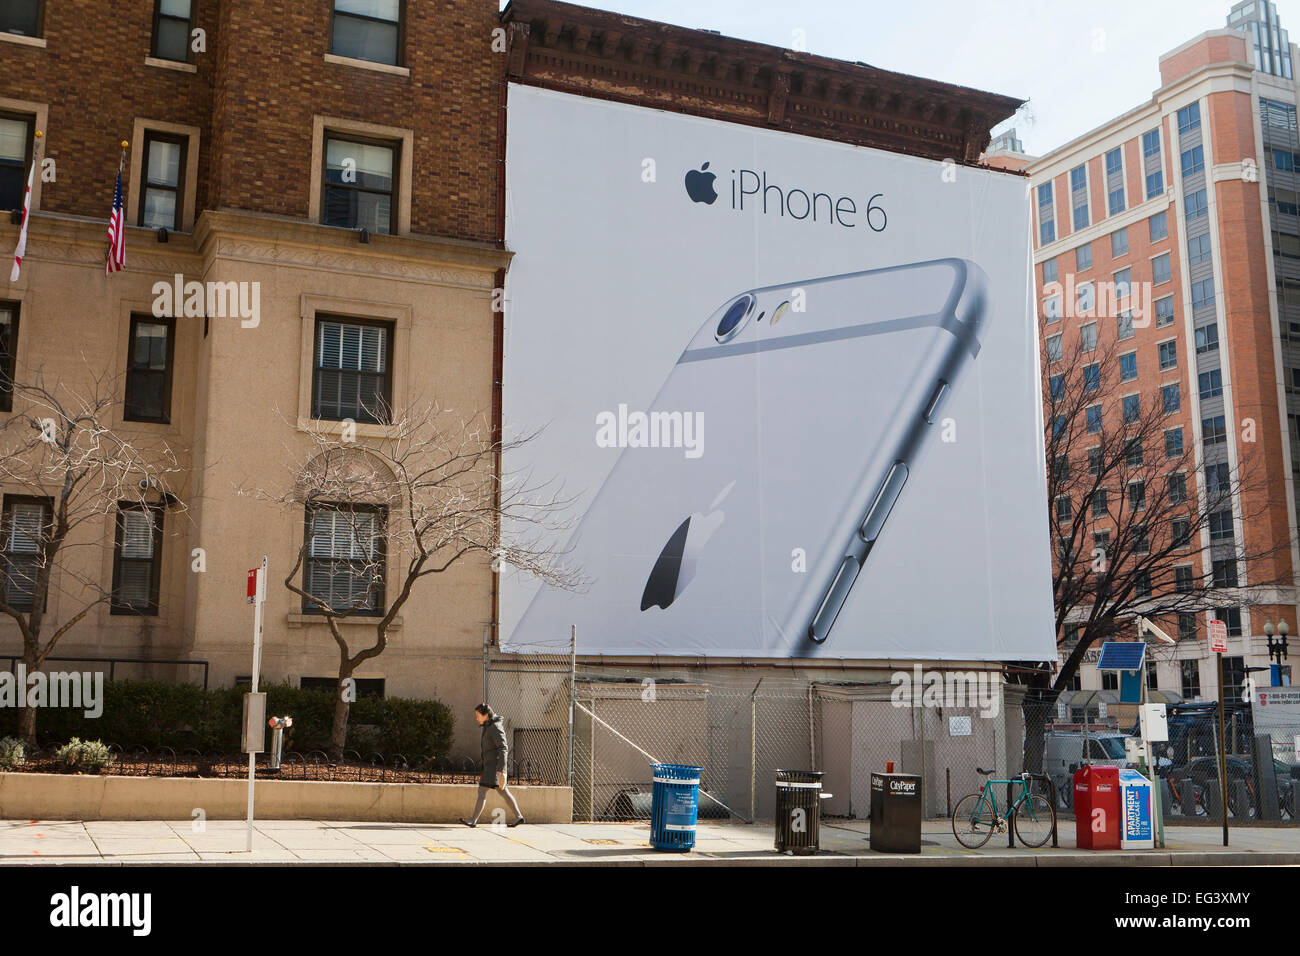 Apple iPhone 6 ad on side of building - Washington, DC USA Stock Photo